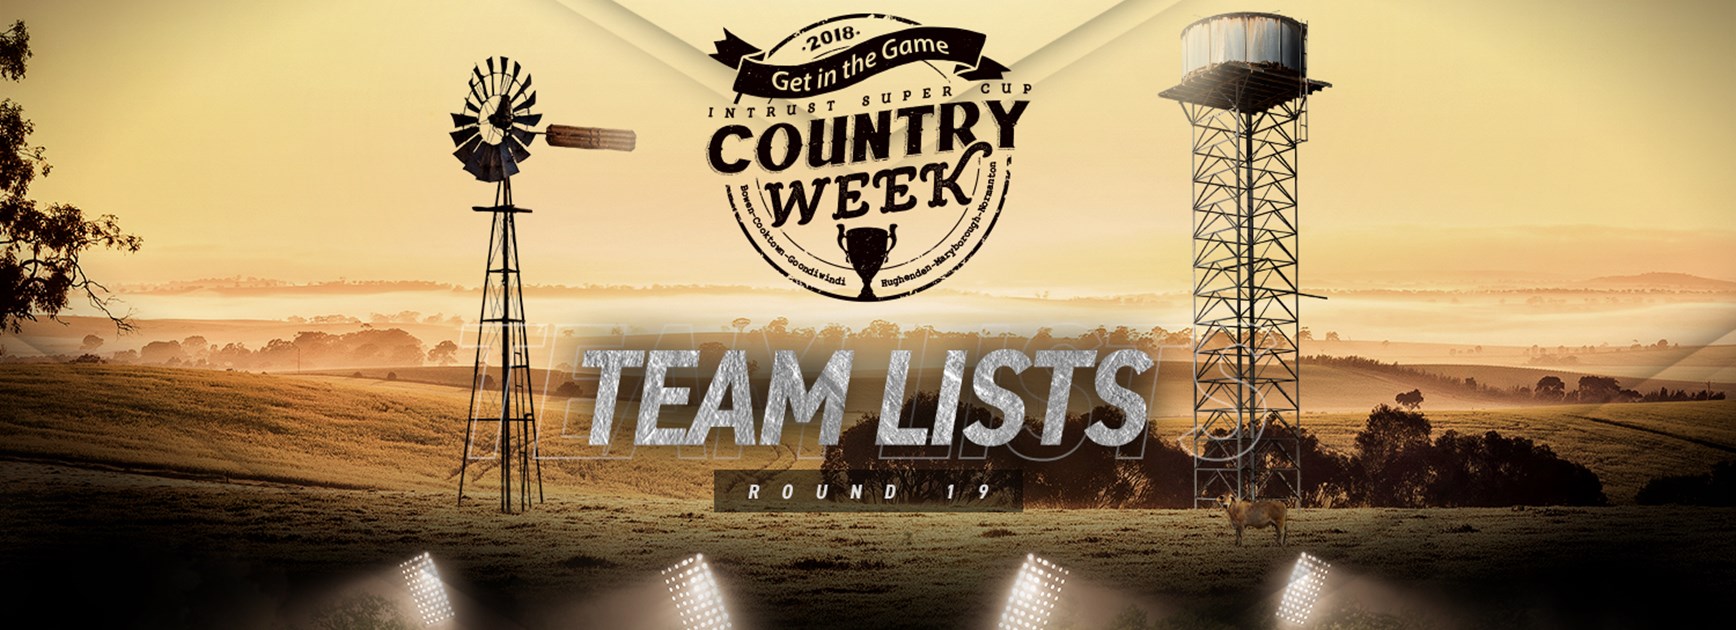 Round 19 Country Week Intrust Super Cup teams